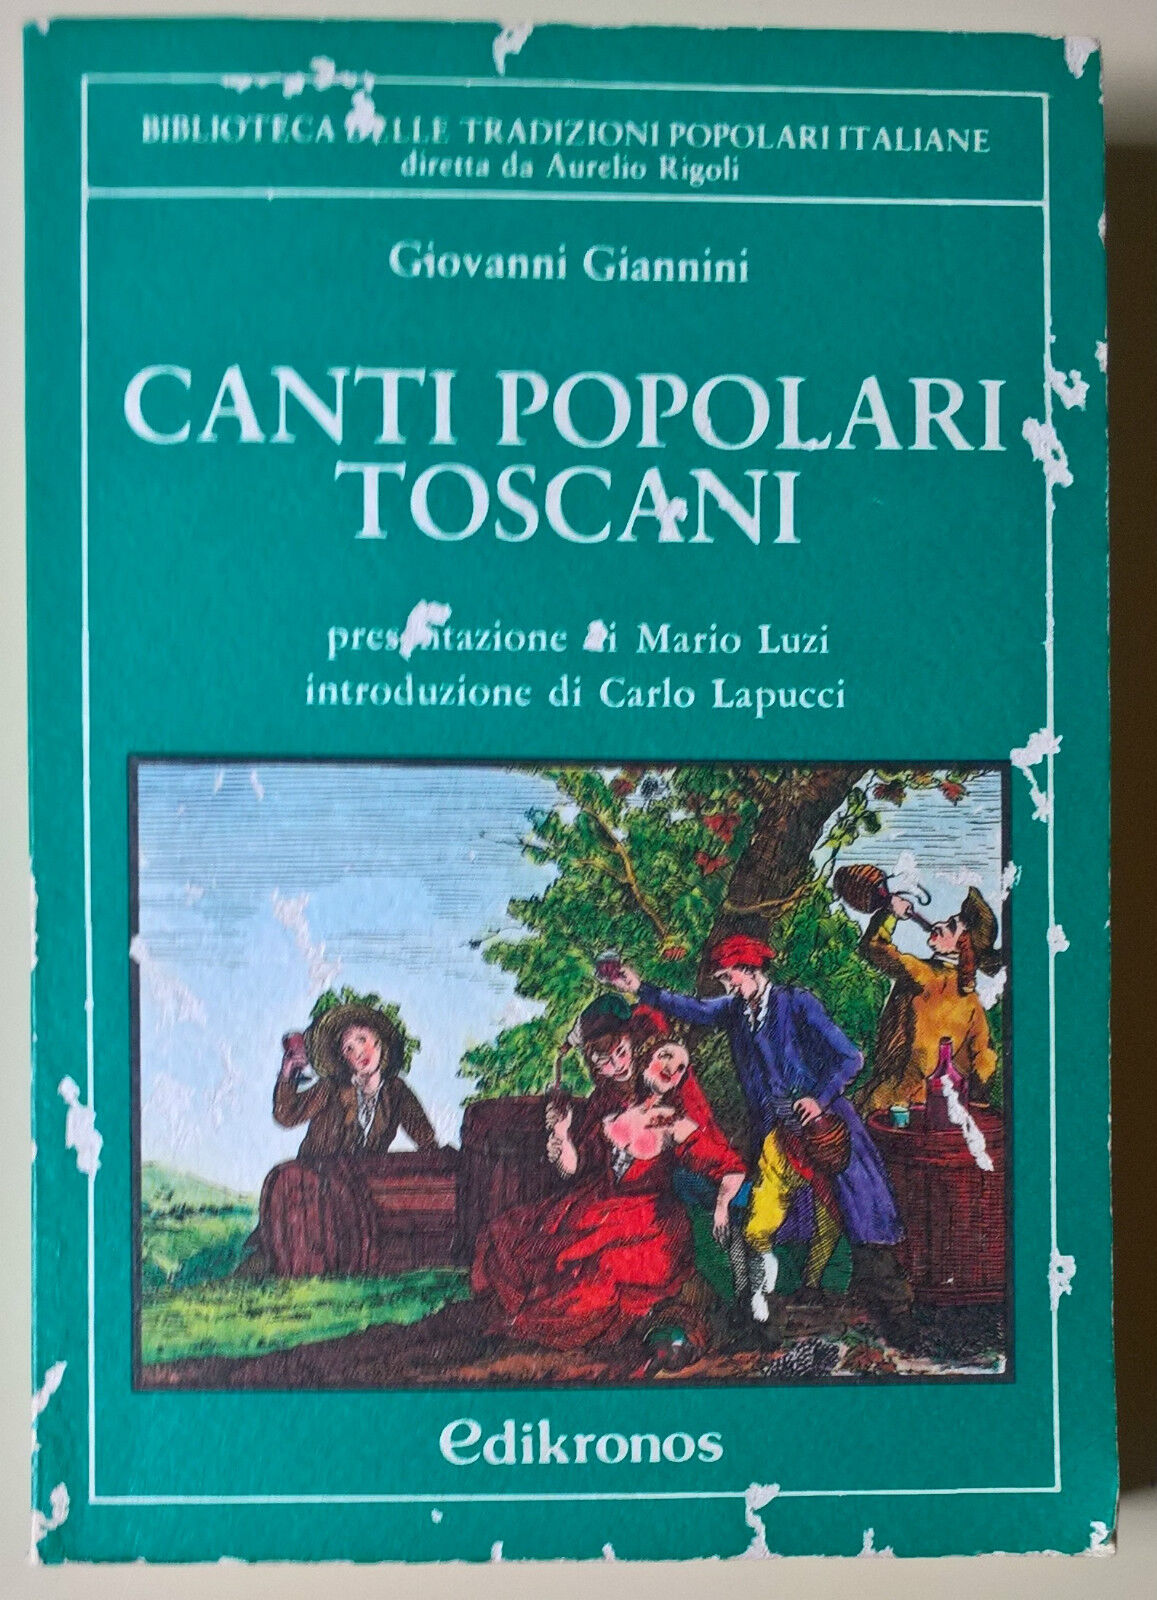 Canti popolari toscani  - Giovanni Giannini - 1981, Edikronos - L